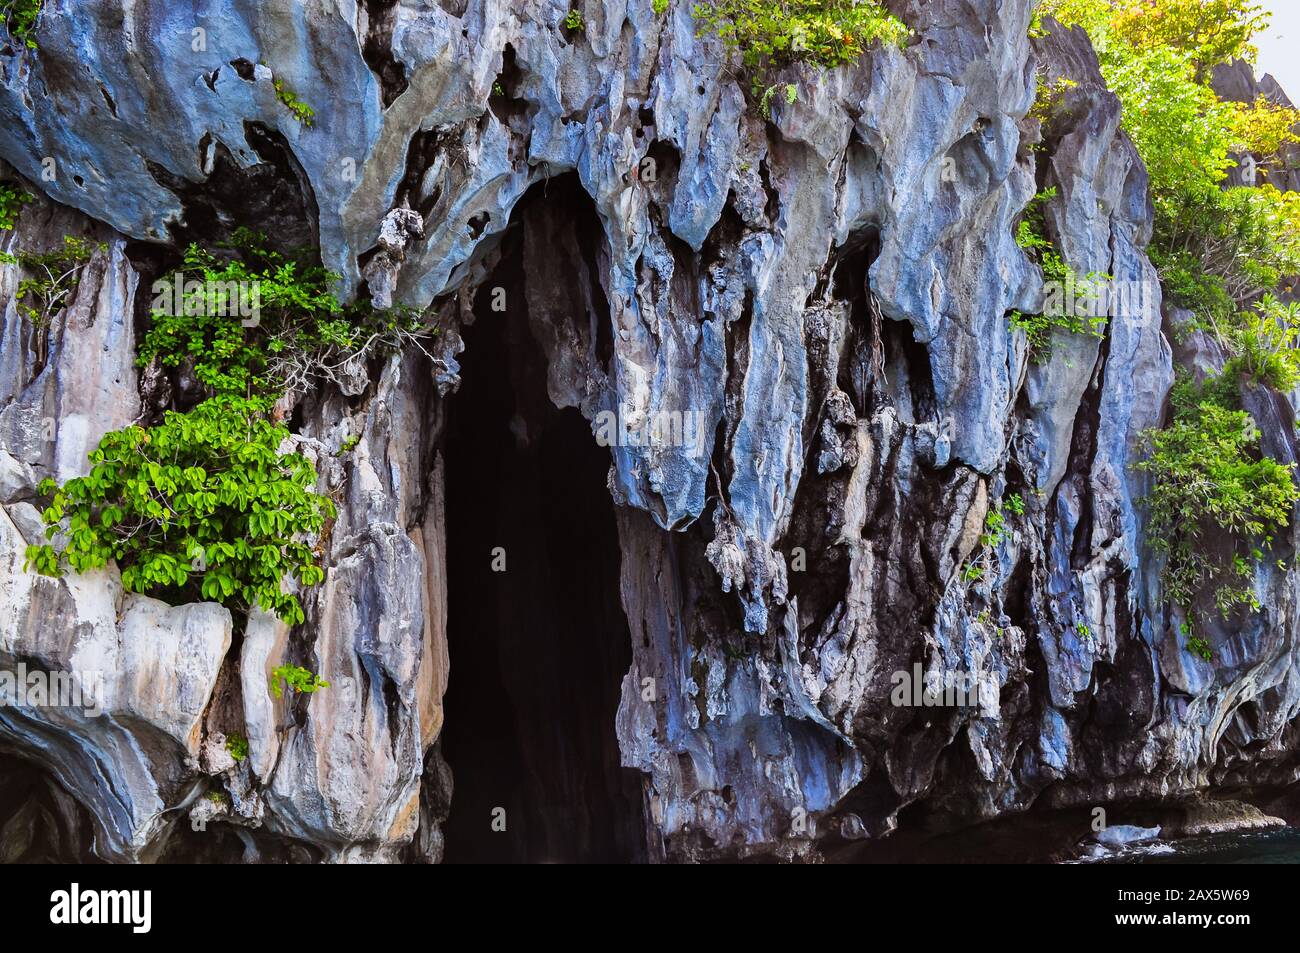 Formation de roches calcaires « Cathedral Cave » - Ile de Pinasil, El Nido, Palawan, Philippines Banque D'Images